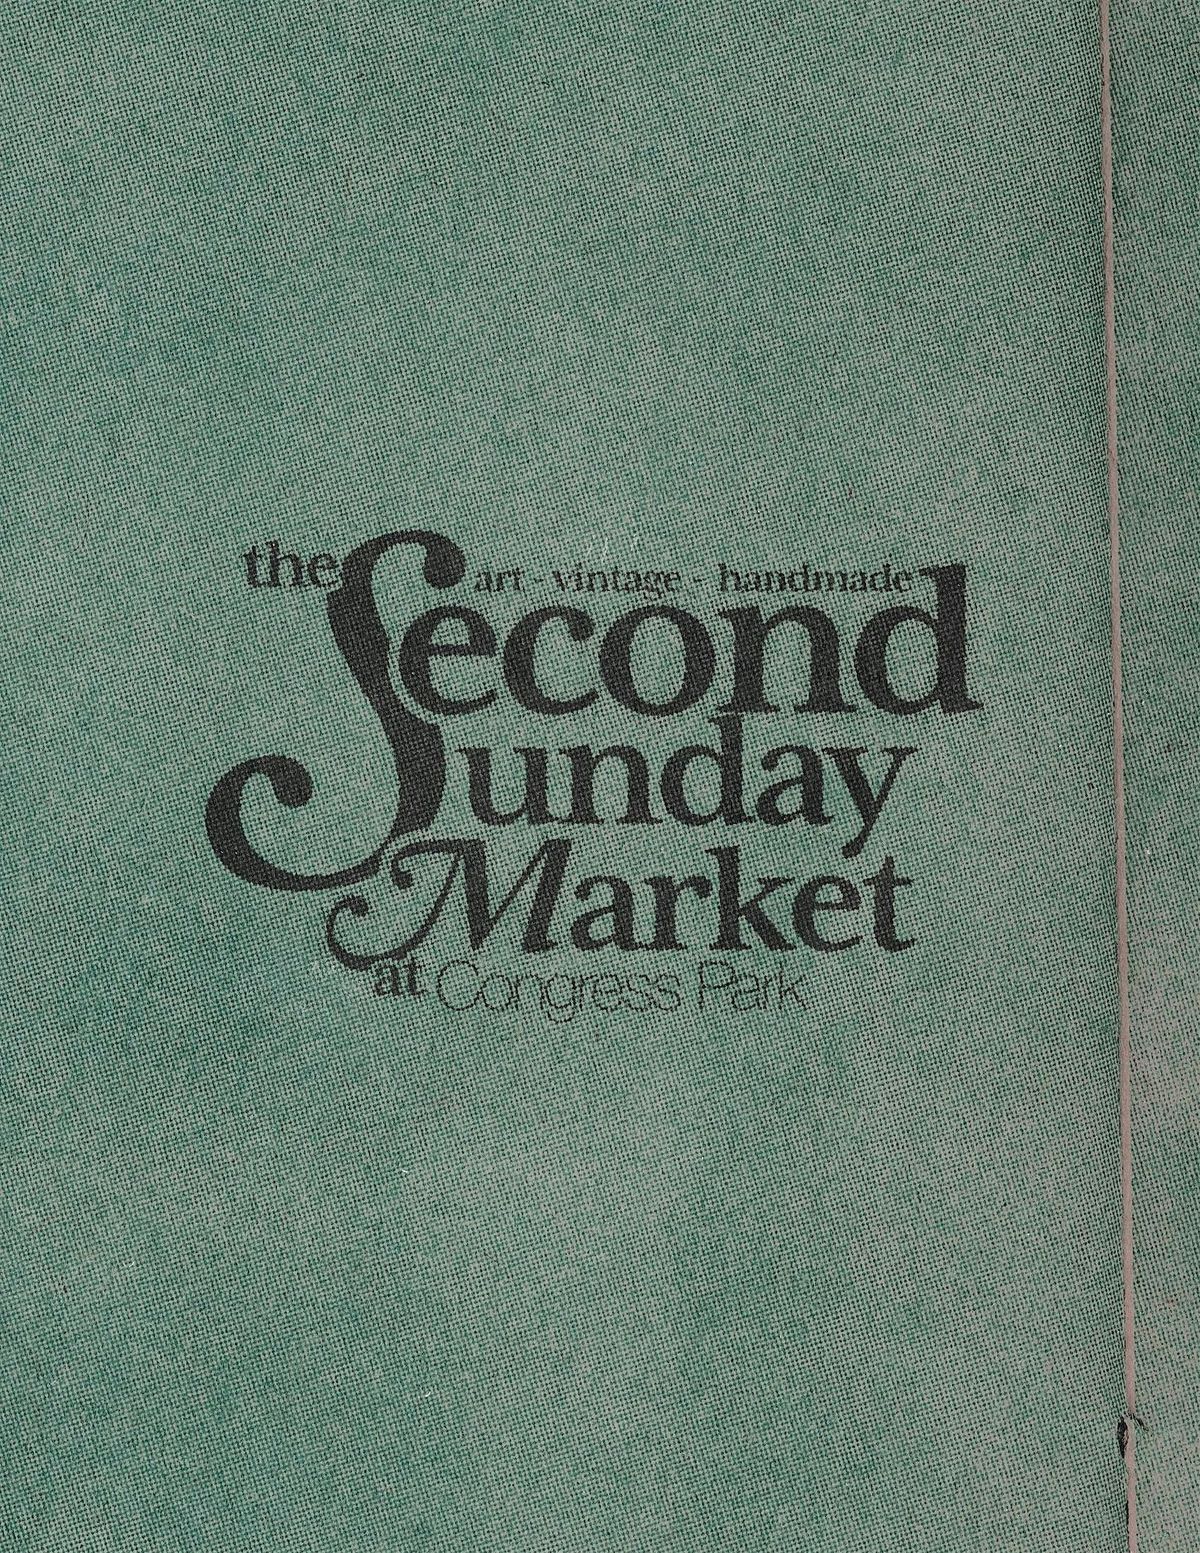 Second Sunday Market